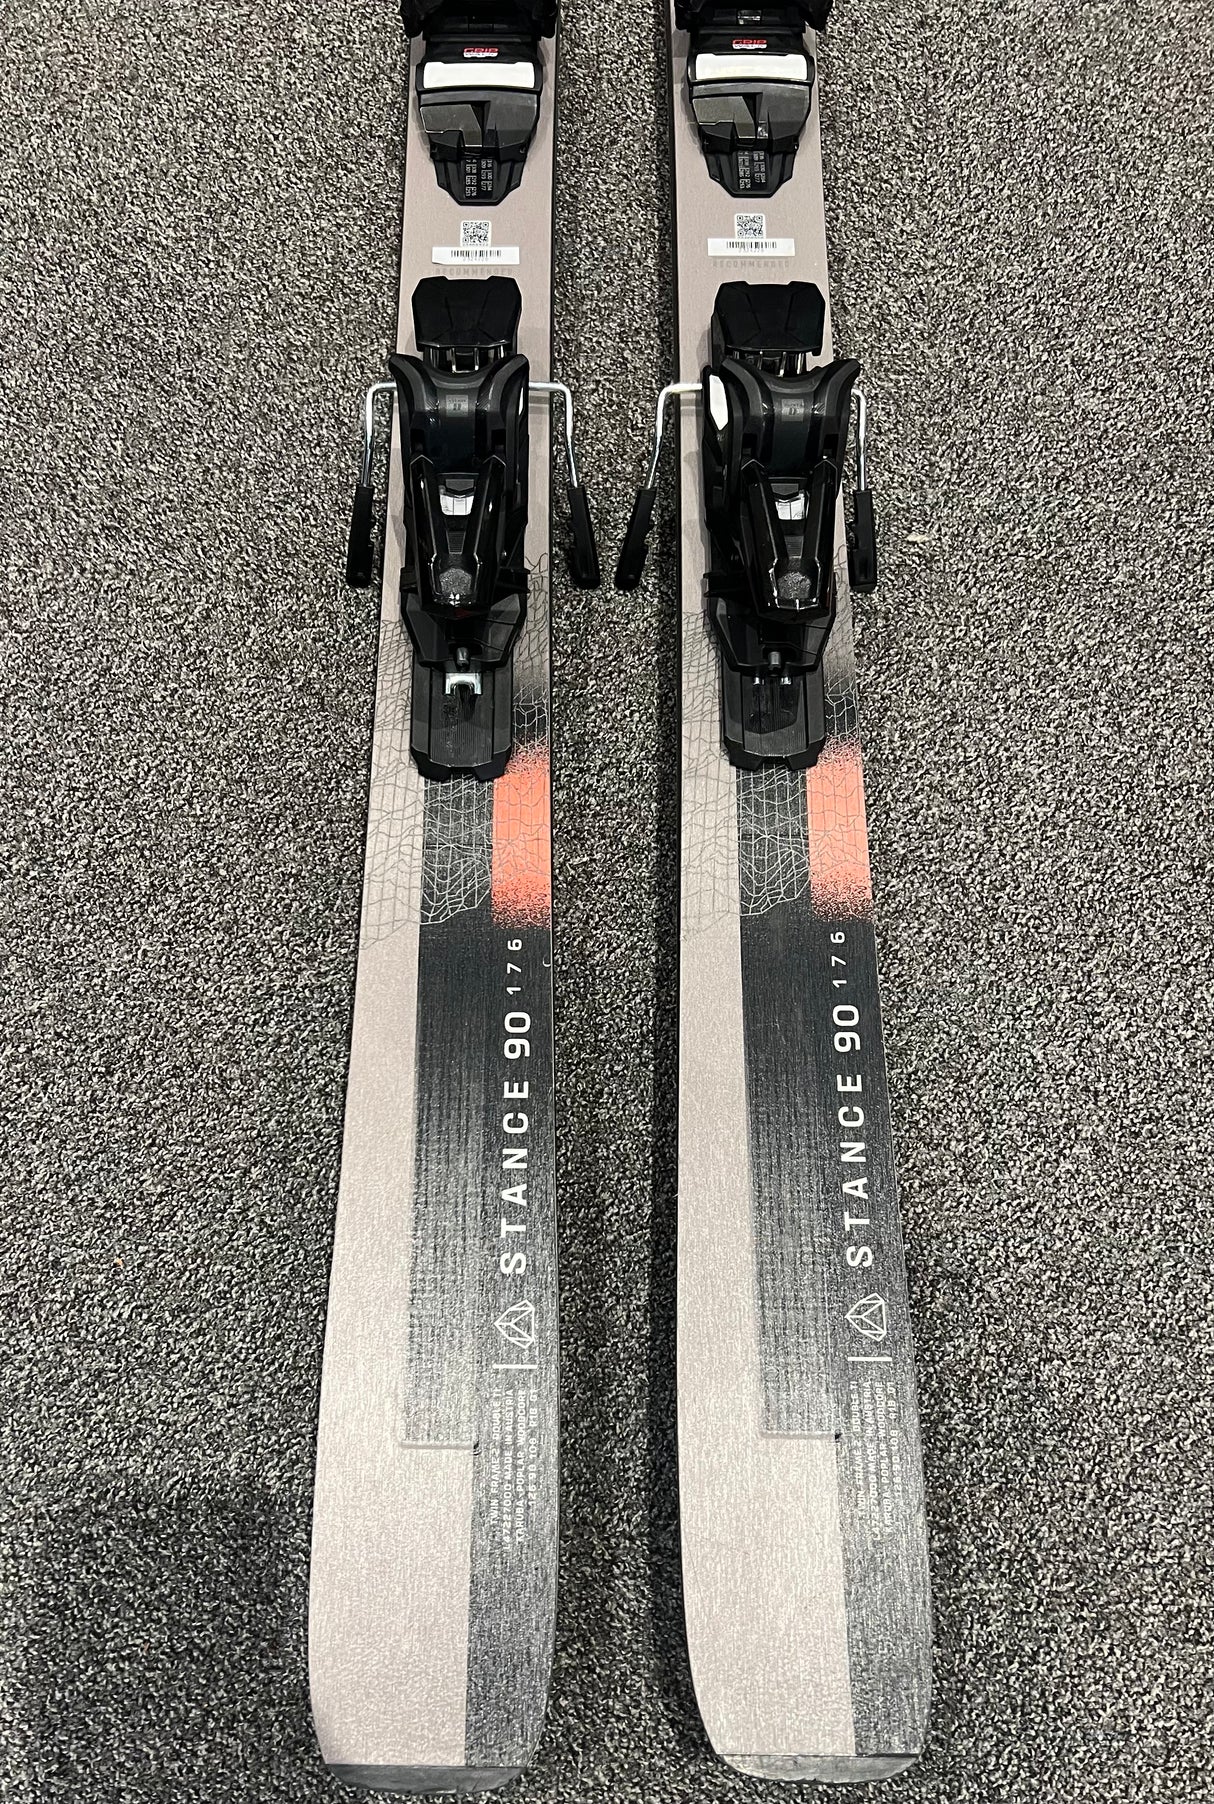 Stance 90 Inc. Strive 13 Bindings 23/24 EX DEMO Skis